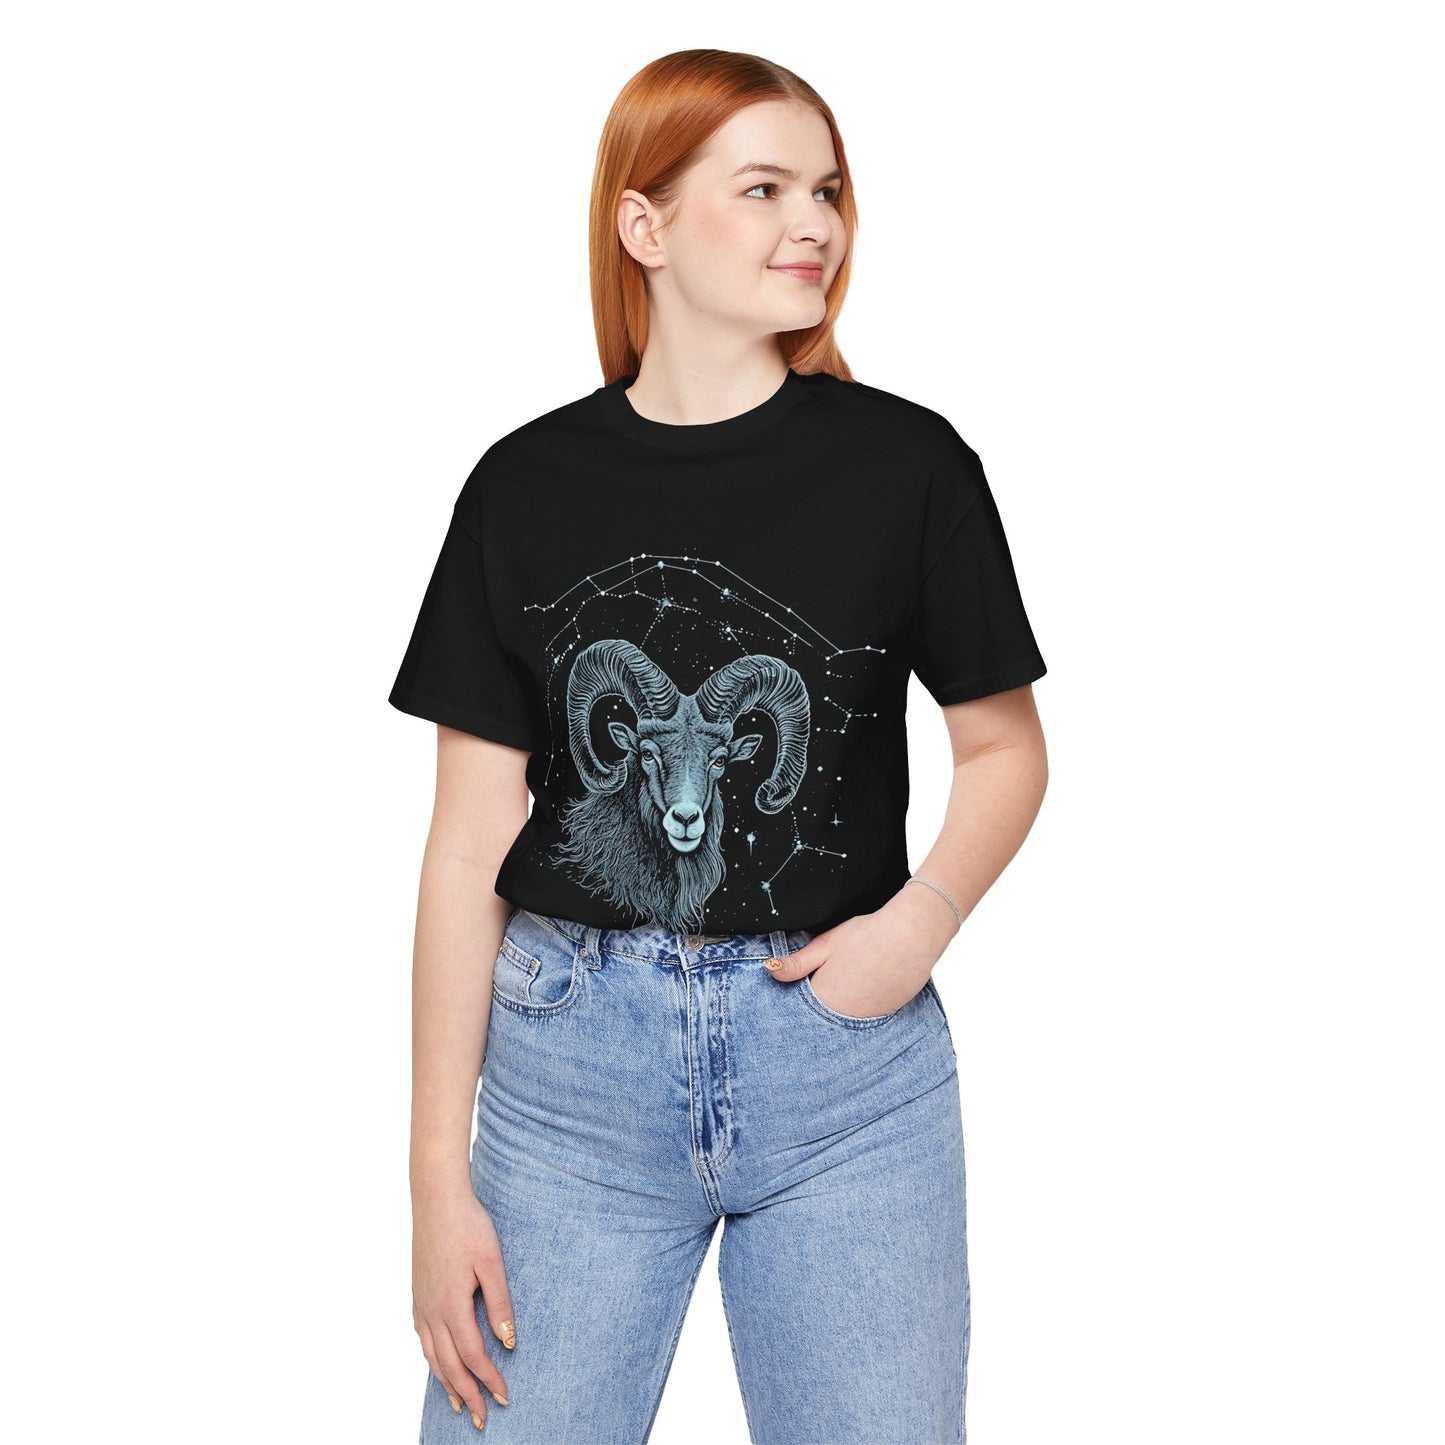 Aries Ascend T-Shirt: Eco-Friendly Zodiac Comfort | Unisex Astrology Tee